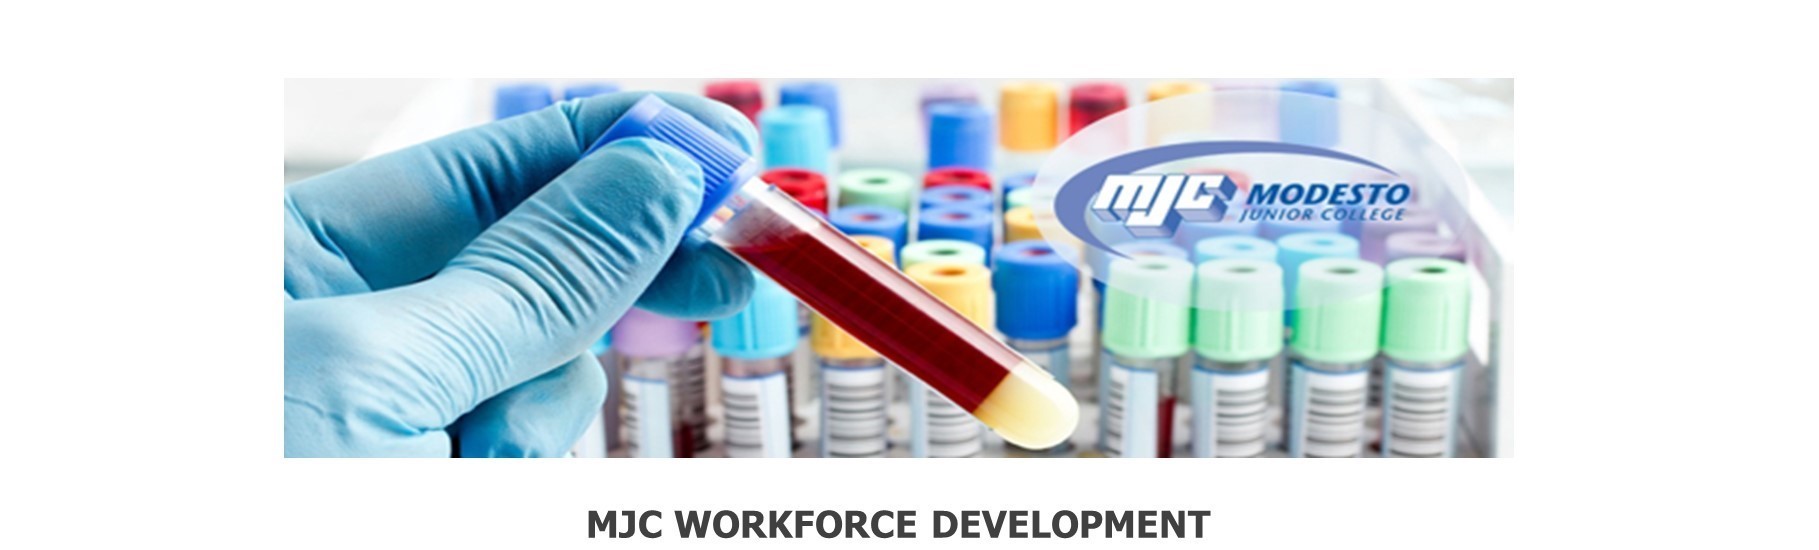  Phlebotomy Vials with Program Name - MJC Workforce Development